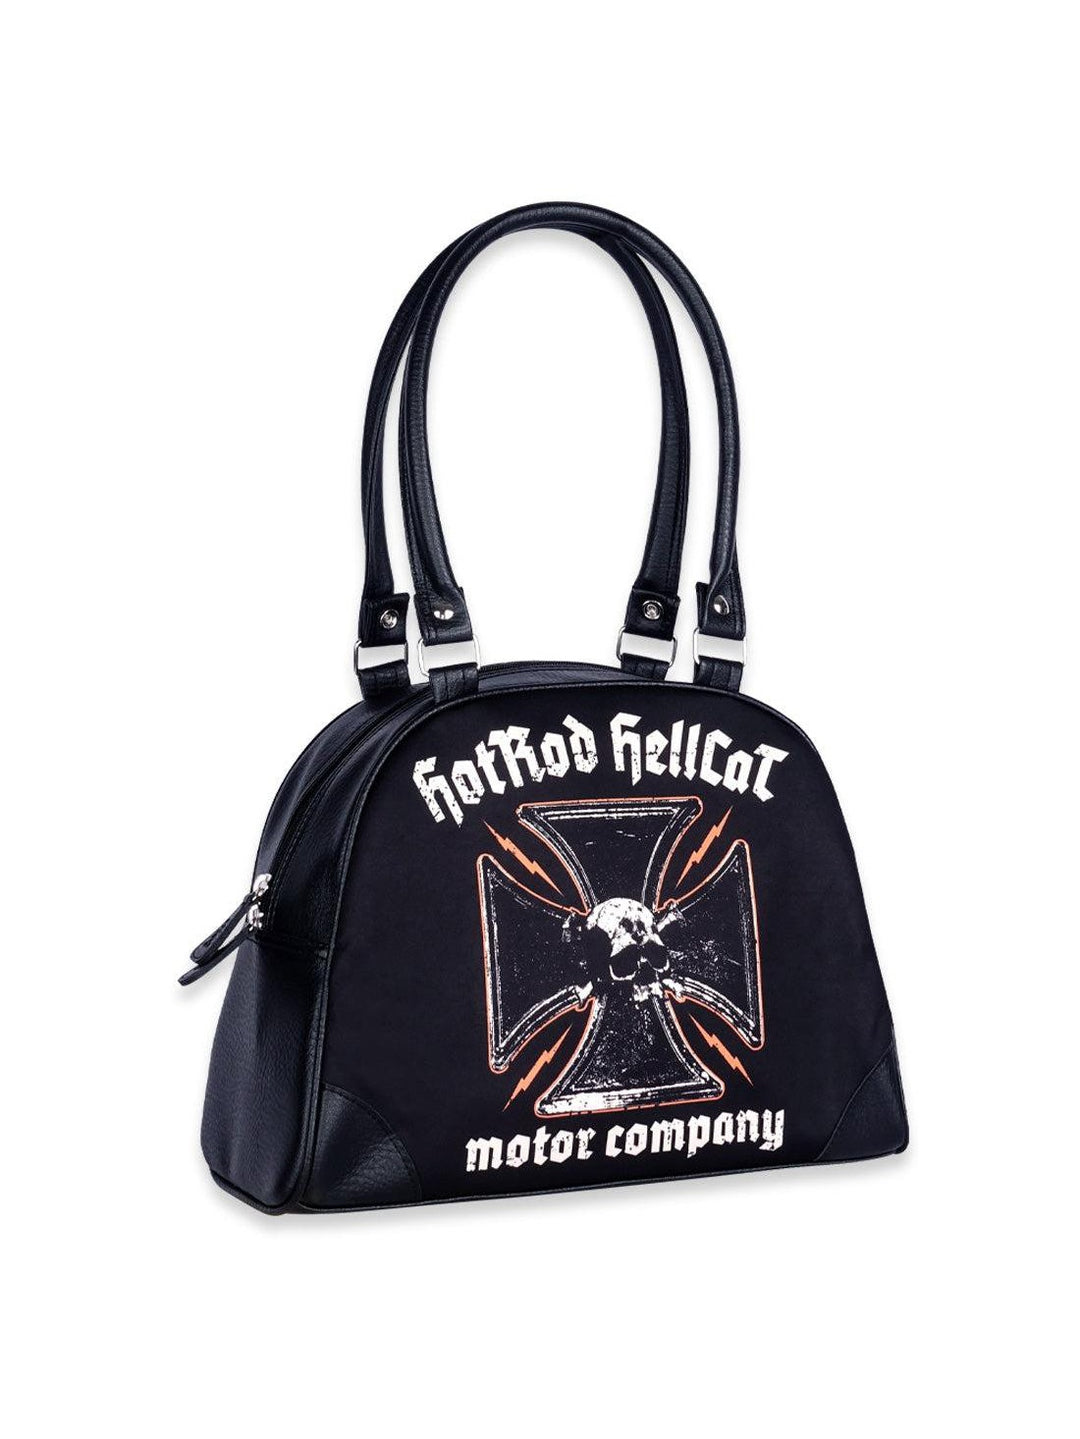 HOTROD HELLCAT Motor Company Bowling Handbag